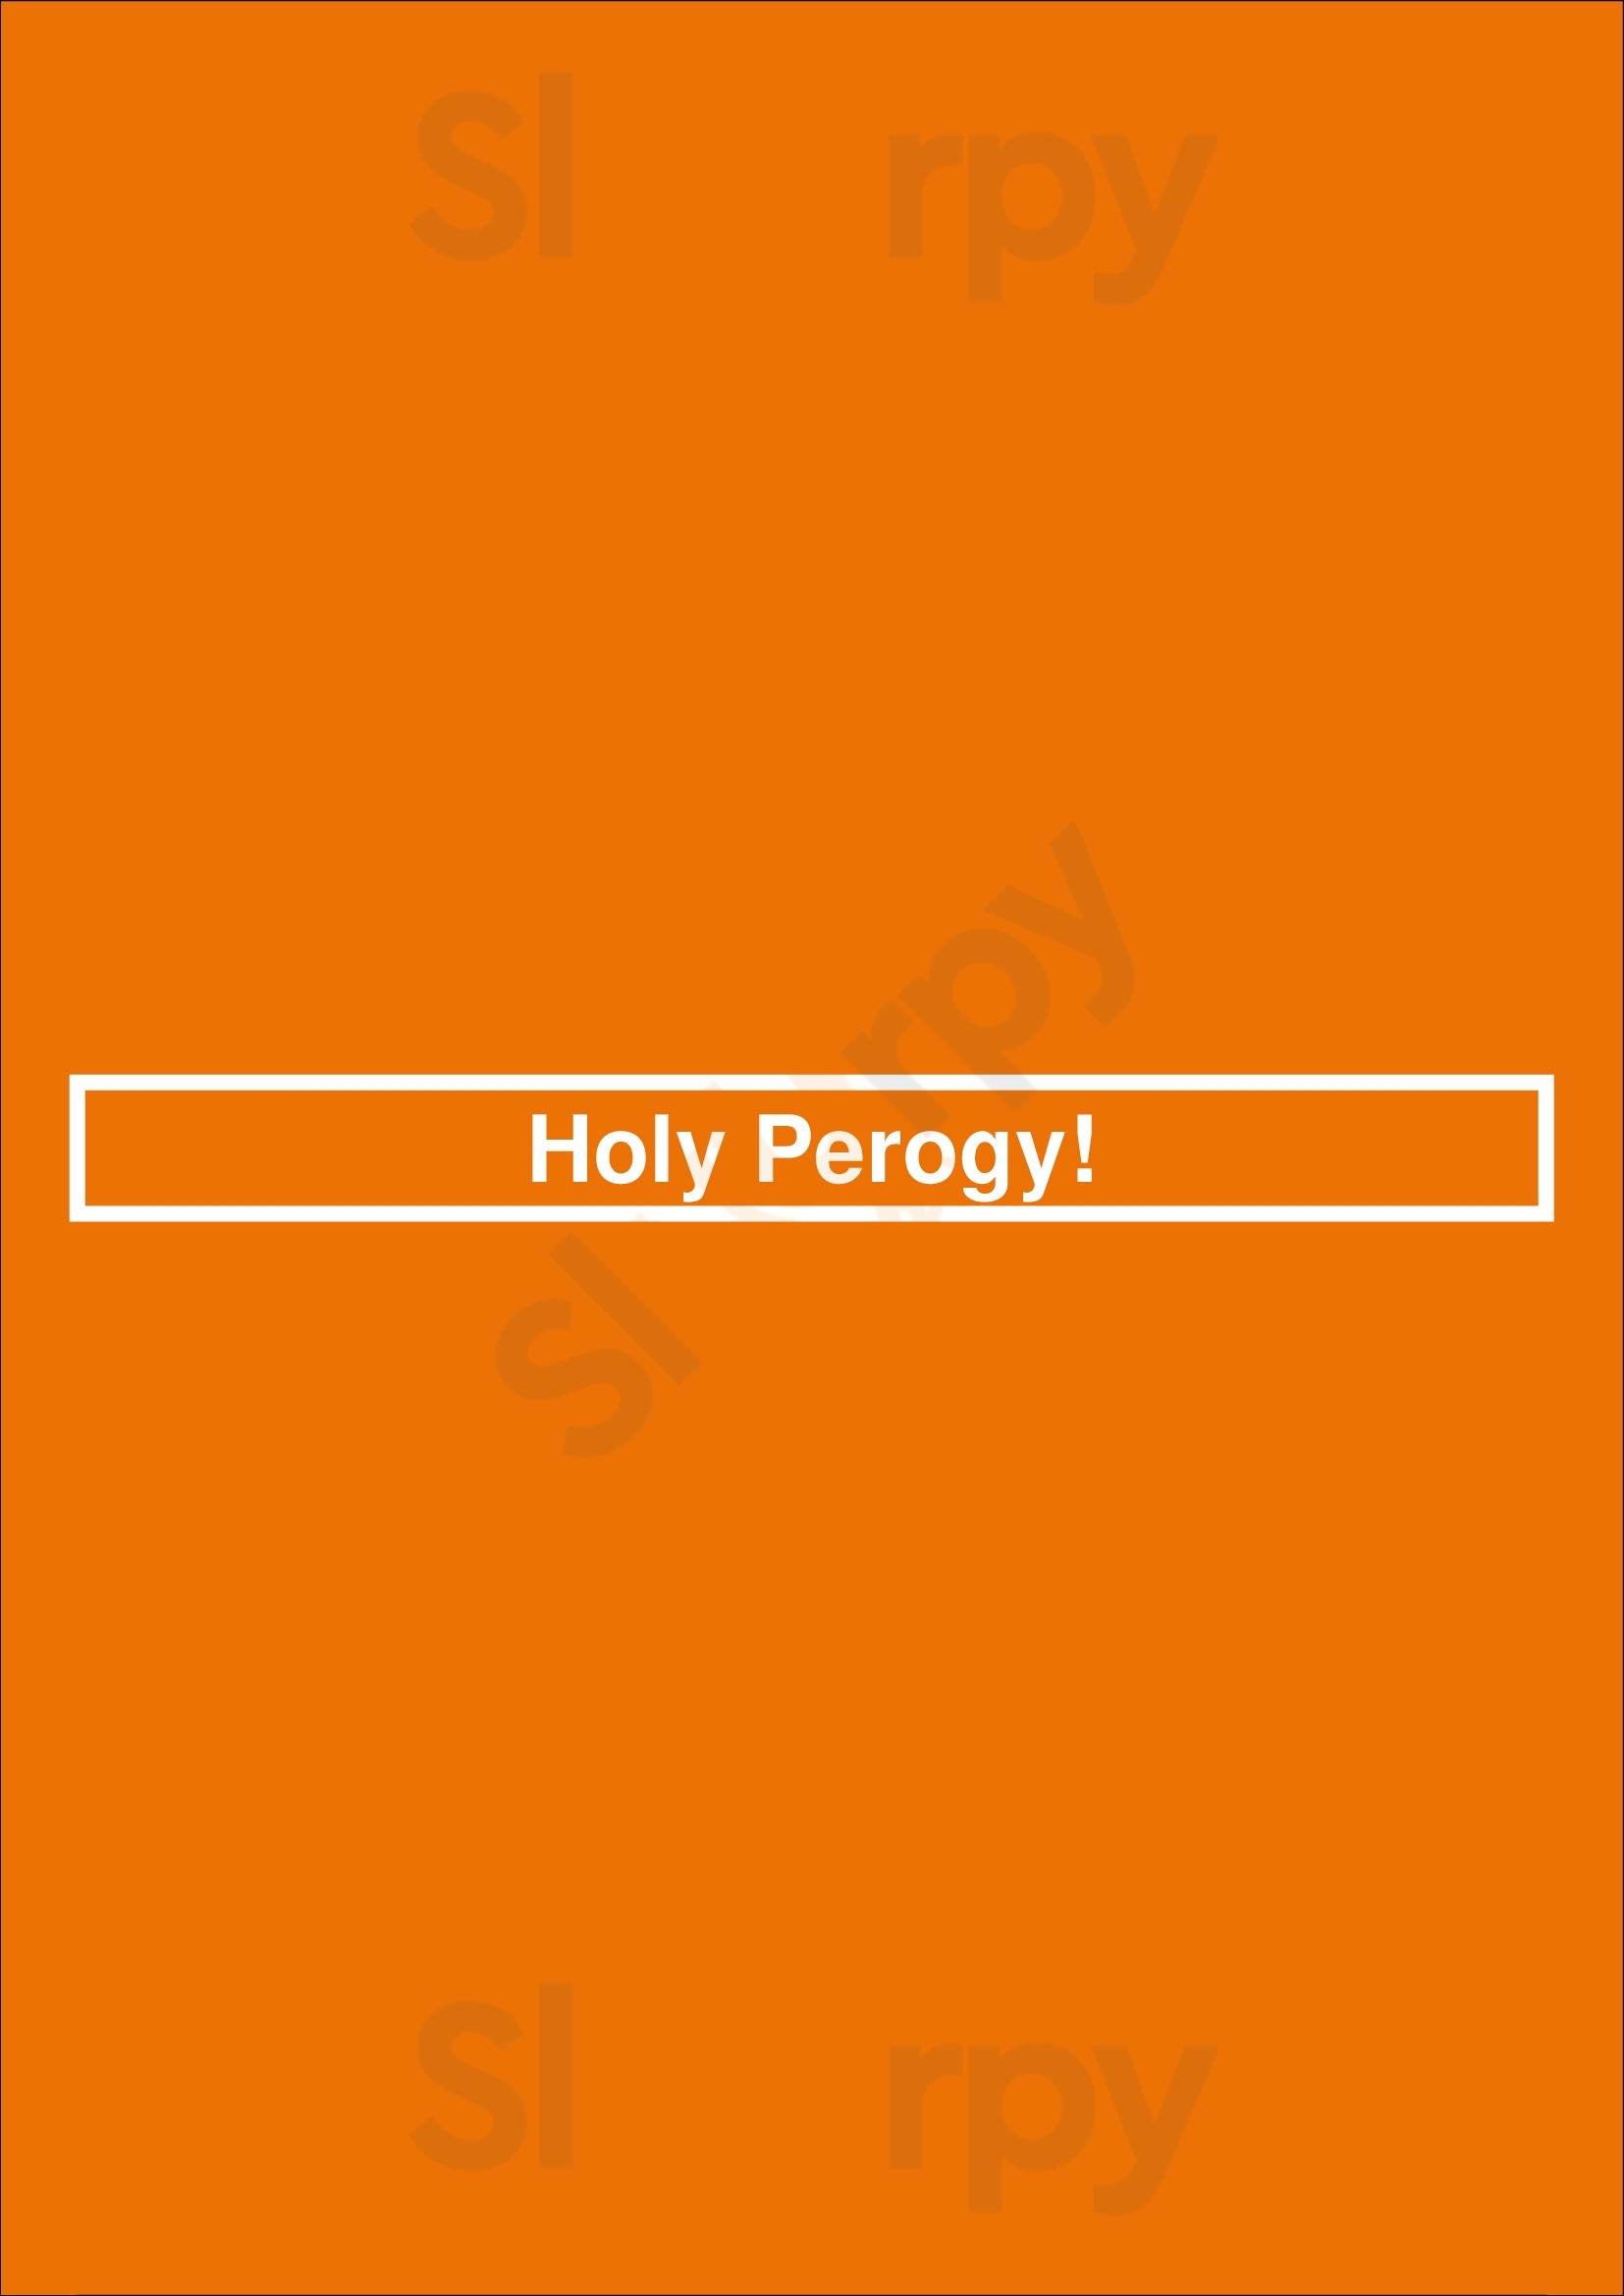 Holy Perogy! Toronto Menu - 1